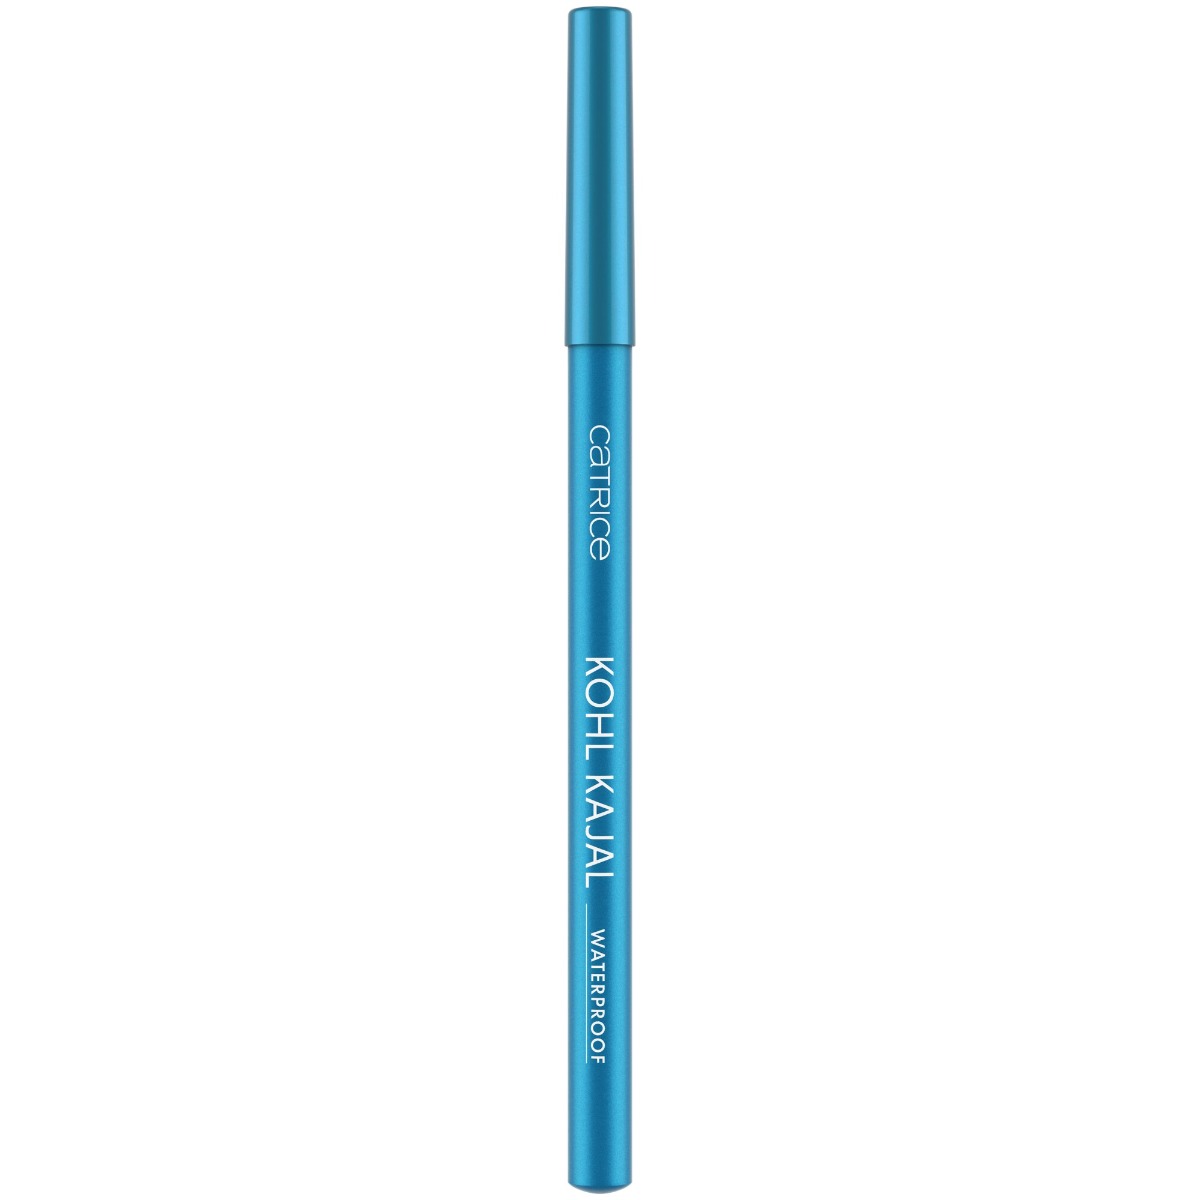 Creion de ochi rezistent la apa Kohl Kajal Waterproof 070 - Turquoise Sense, 0.78g, Catrice